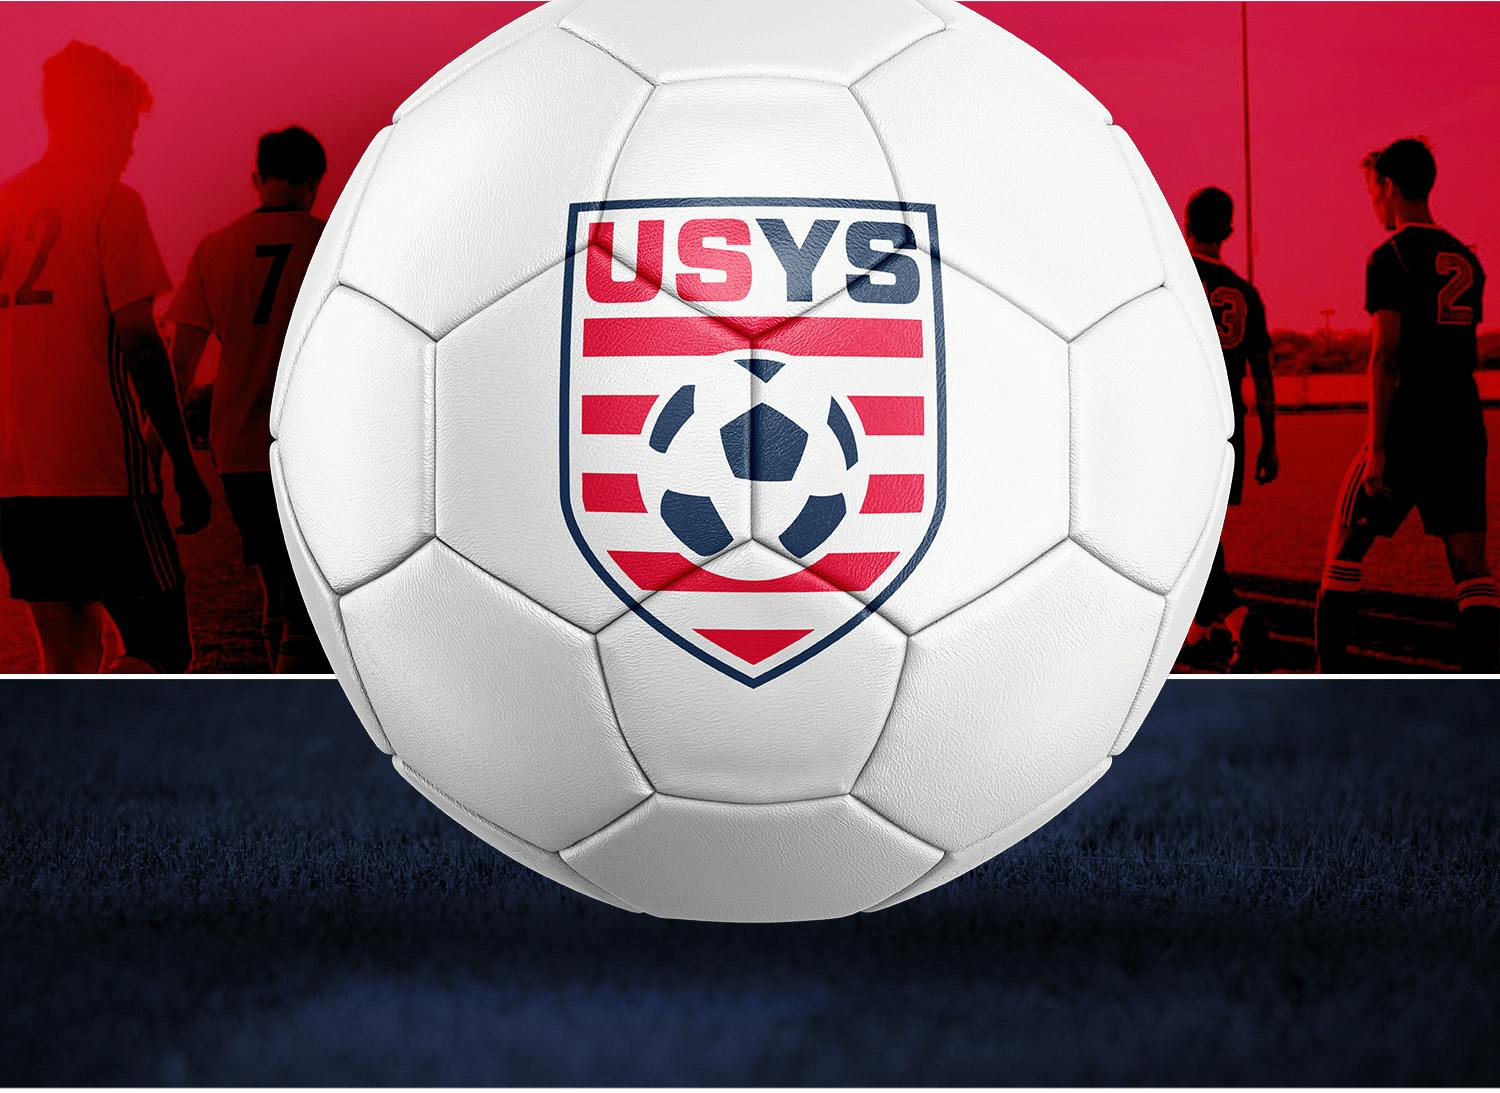 USYS logo on a soccer ball